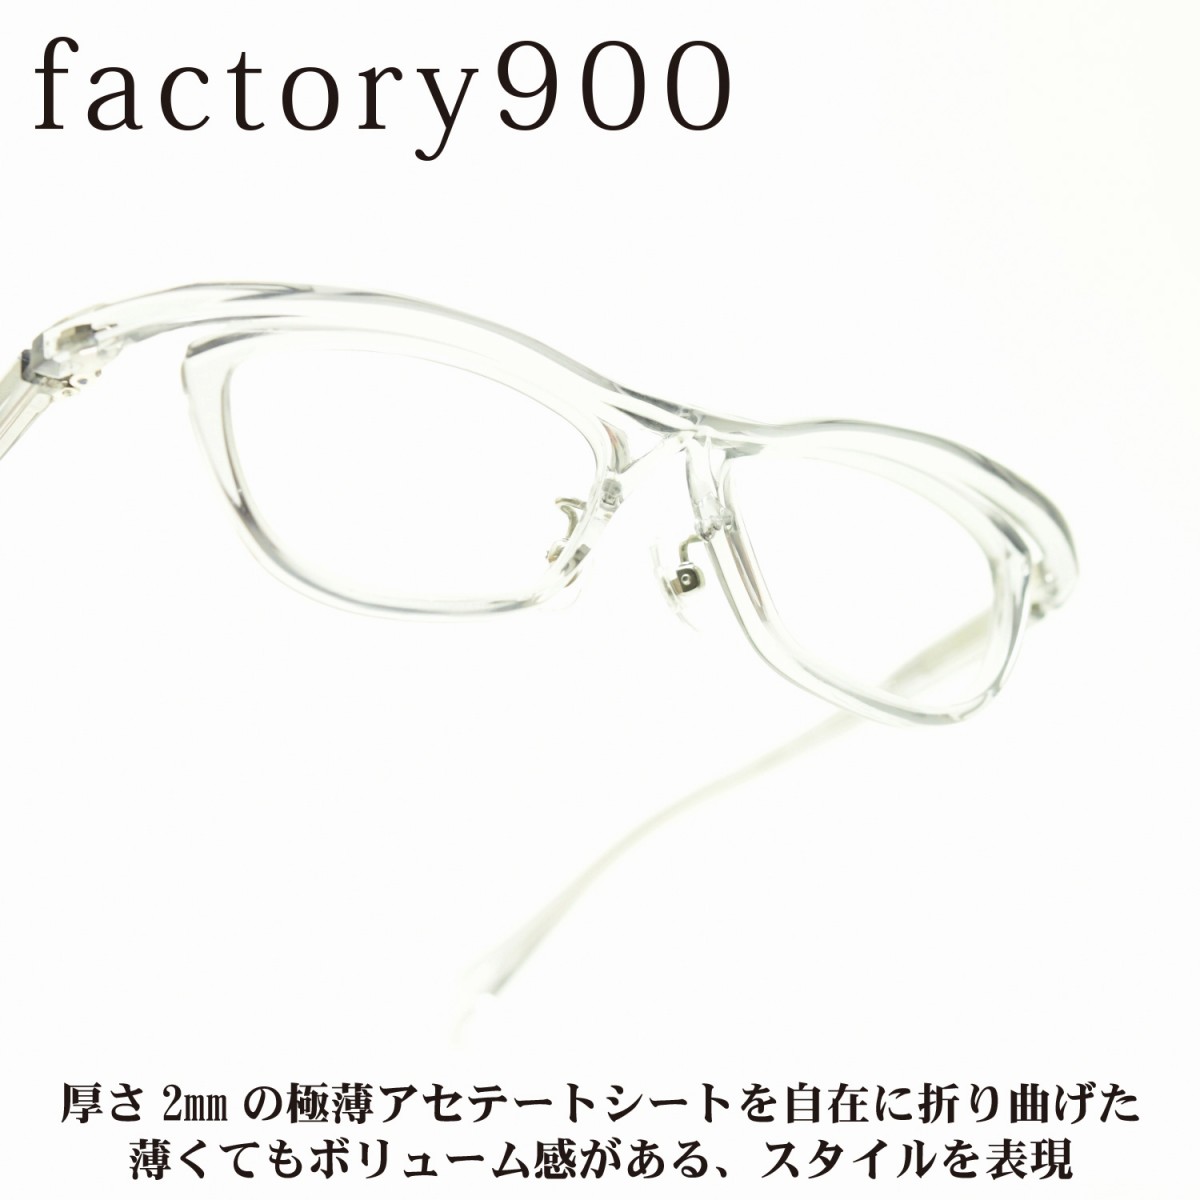 factory900 ファクトリー900 FA-2032 col-840